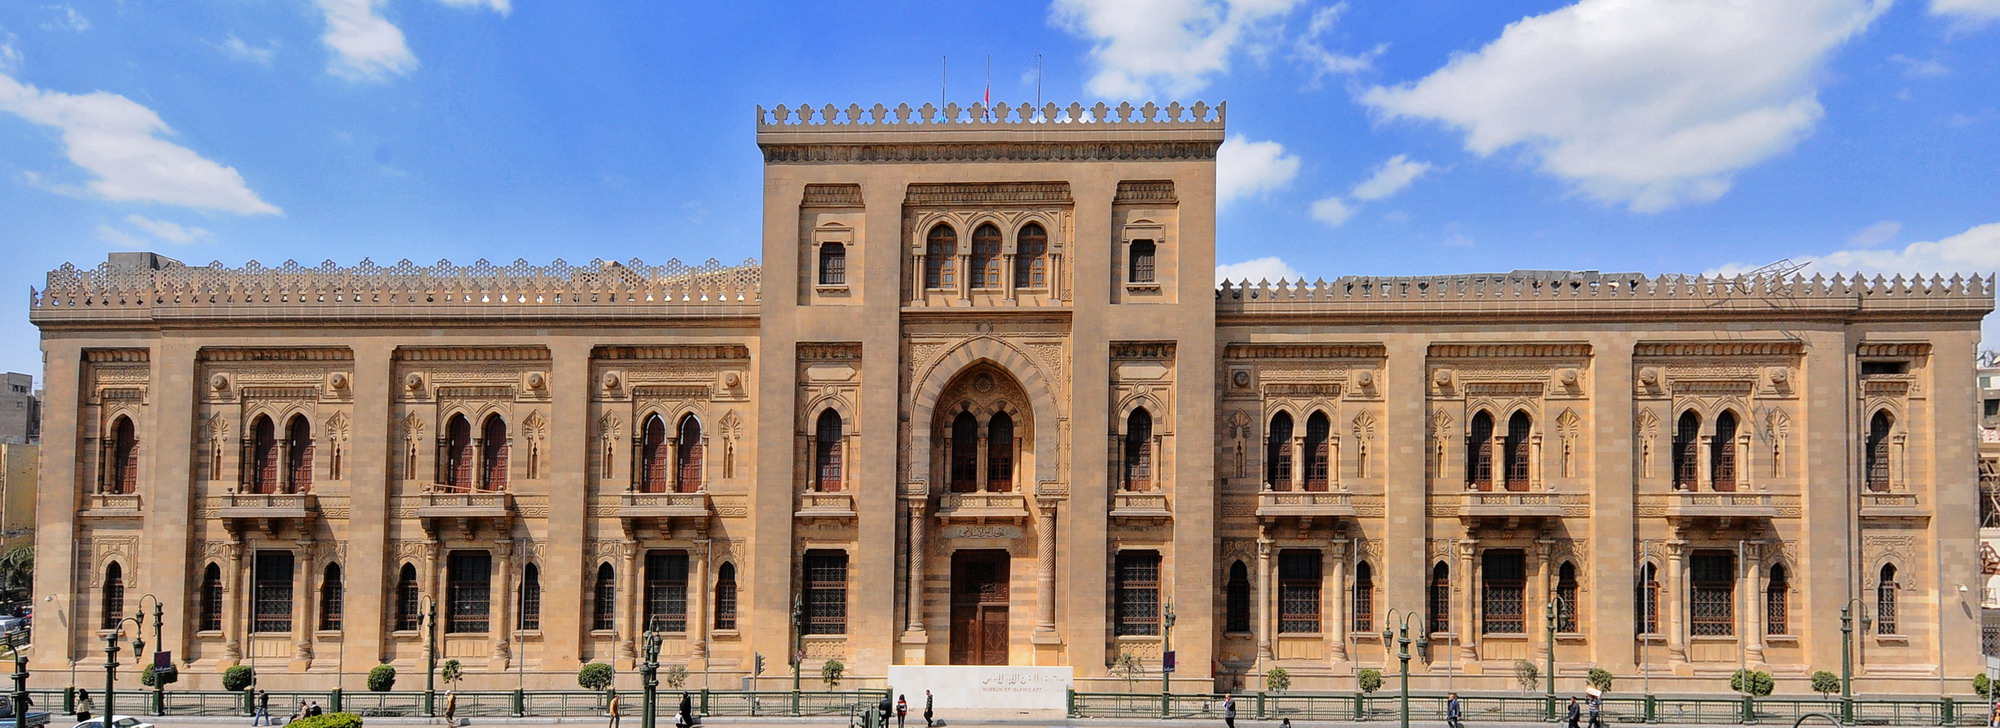 Cairo’s Museum of Islamic Art: The Largest Museum of Islamic Art Worldwide